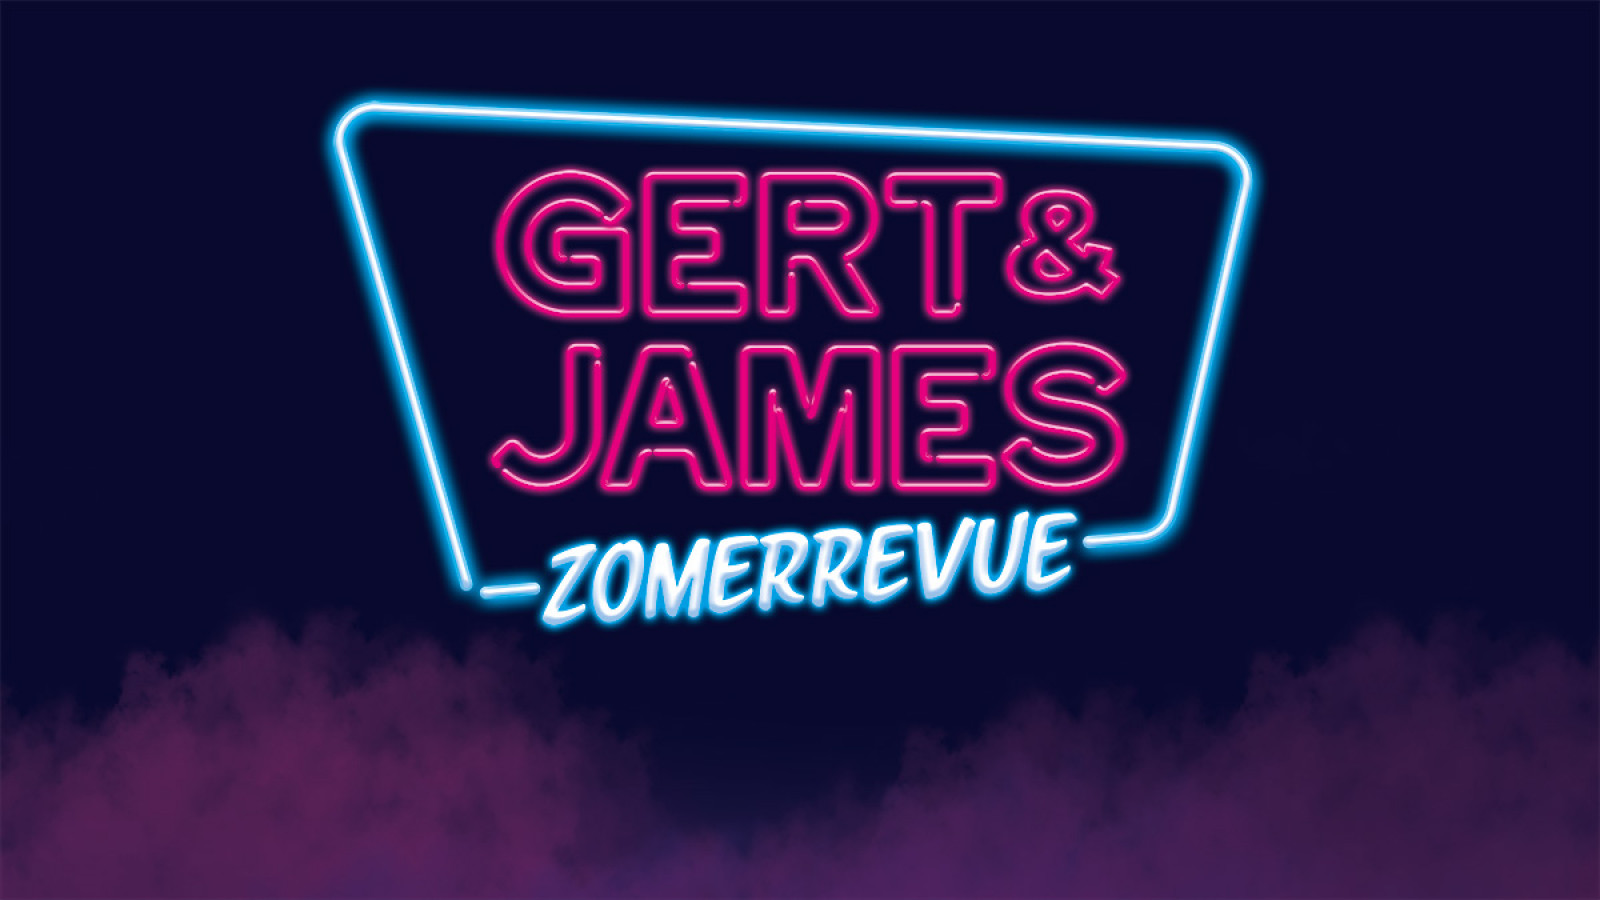 LOGO GERT & JAMES ZOMERREVUE-16x9.jpg